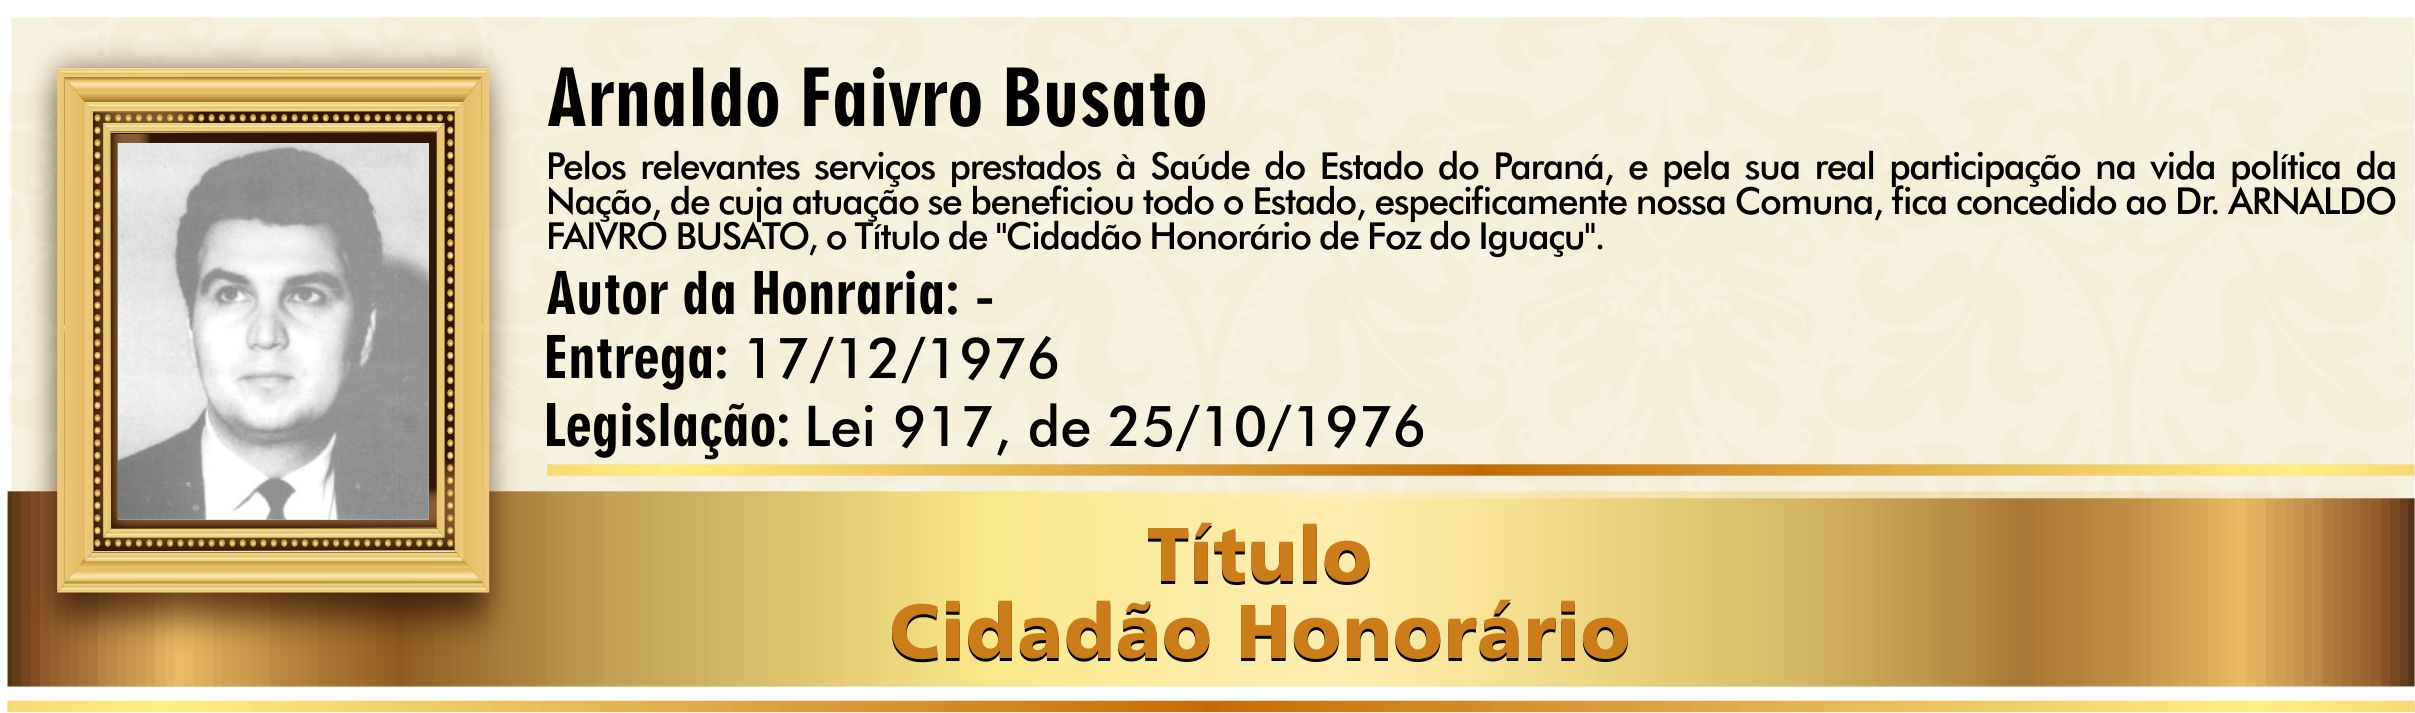 Arnaldo Faivro Busato